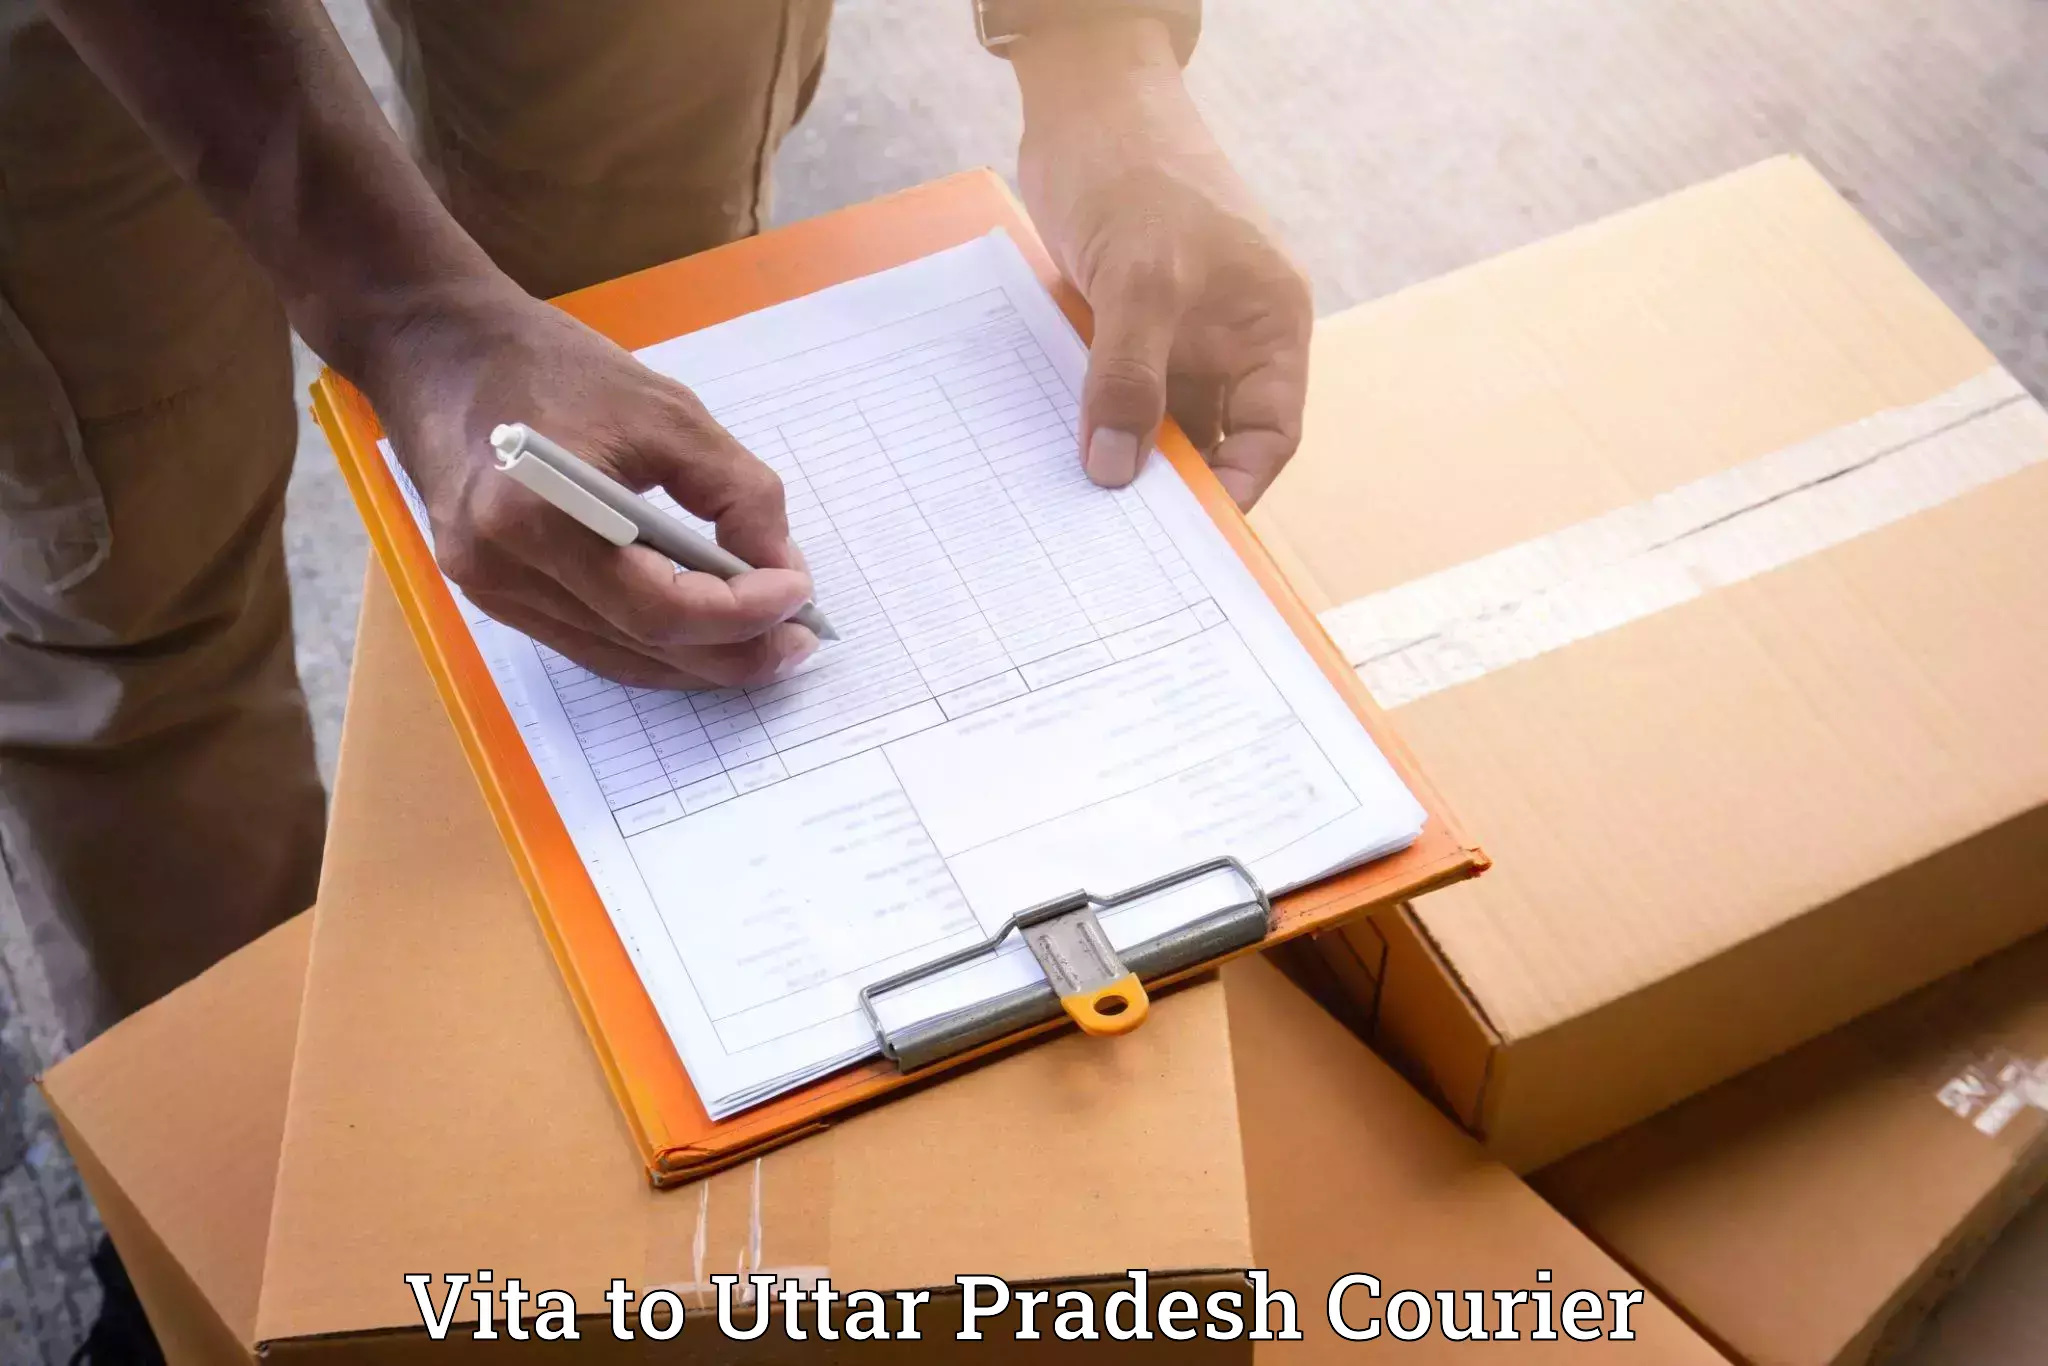 Efficient relocation services Vita to Uttar Pradesh